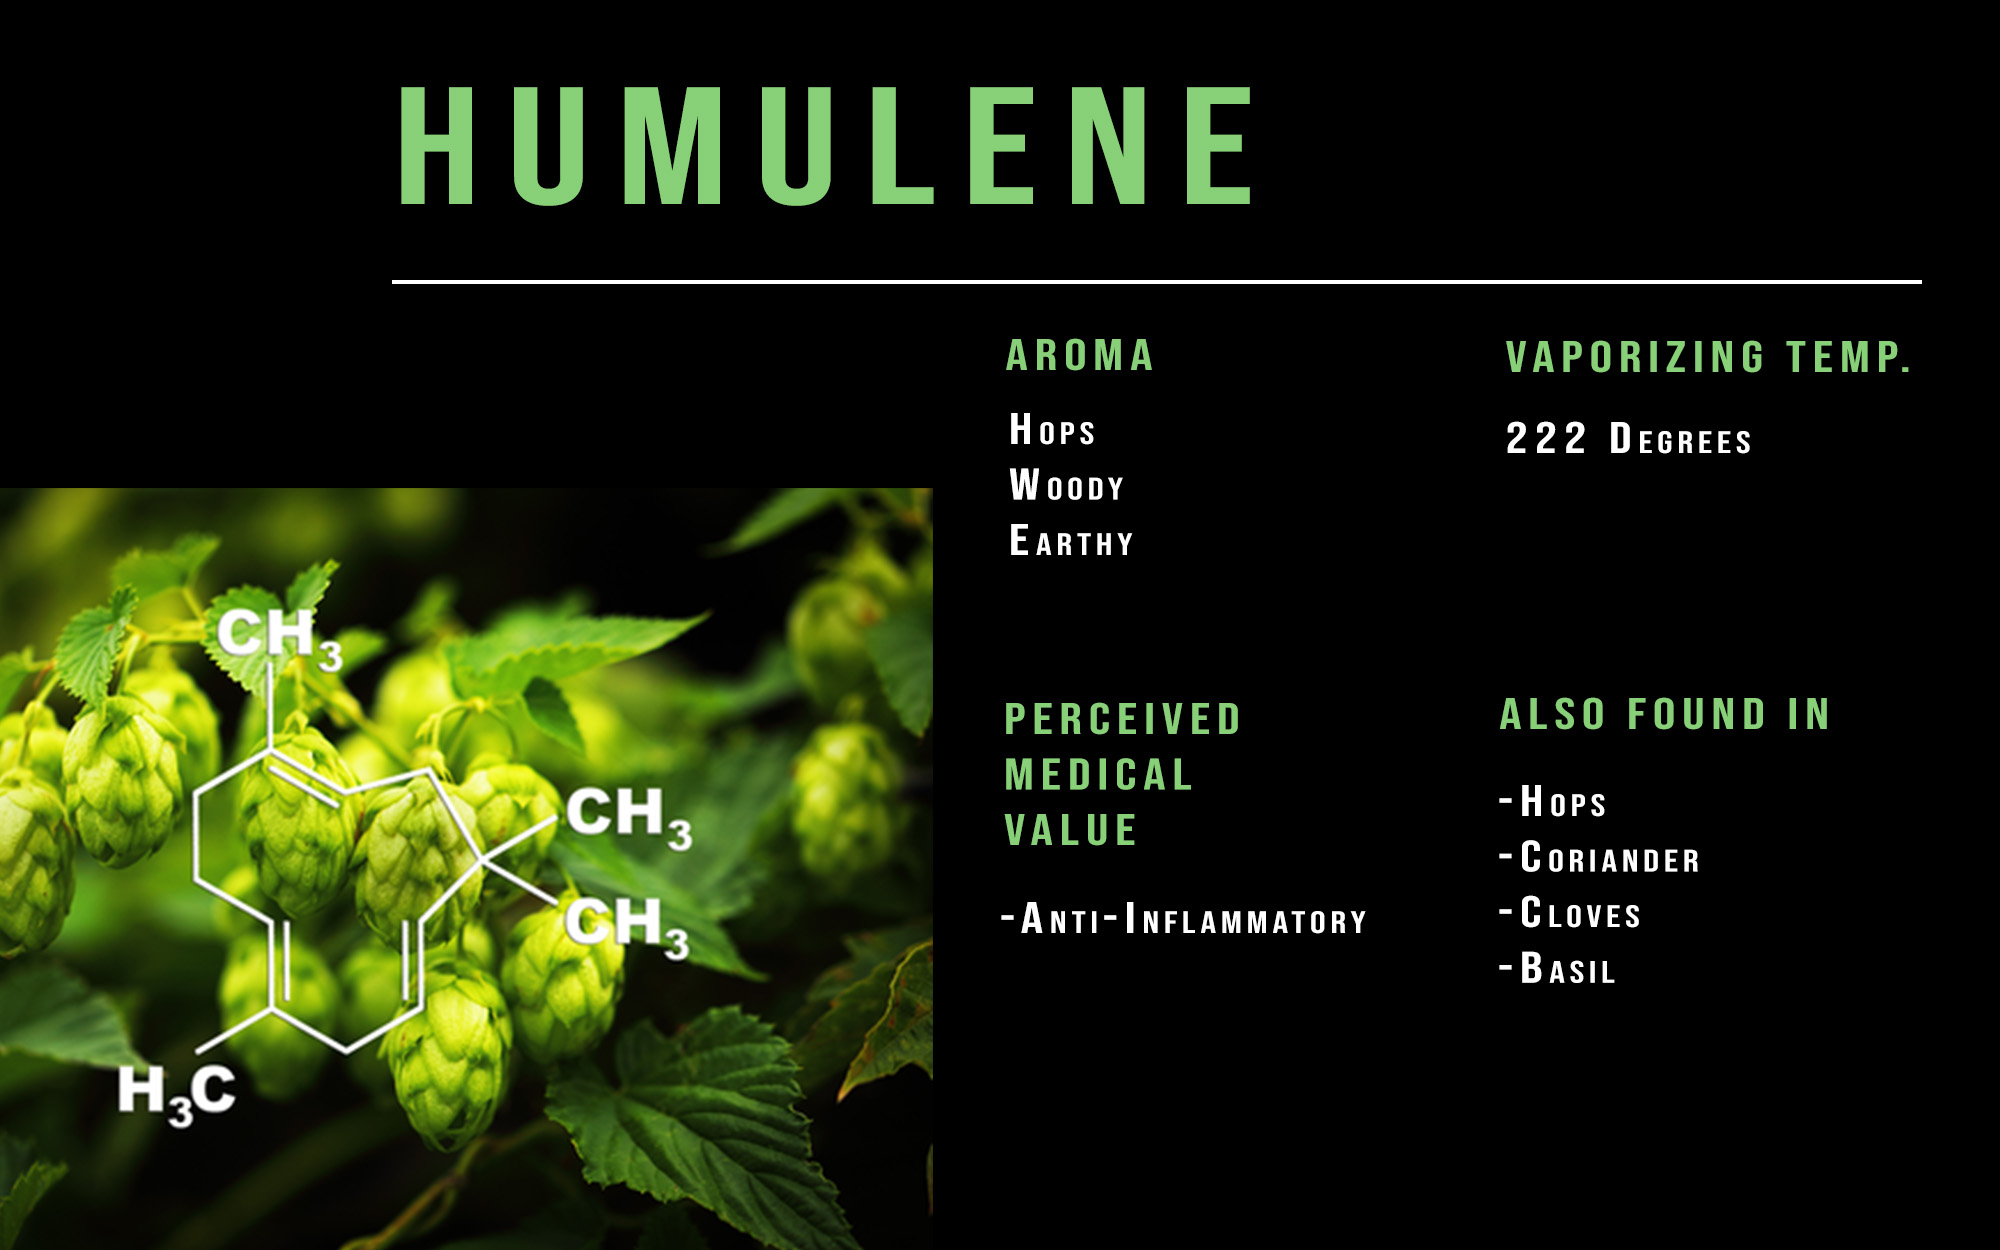 Humulene cannabis terpene profile info graph